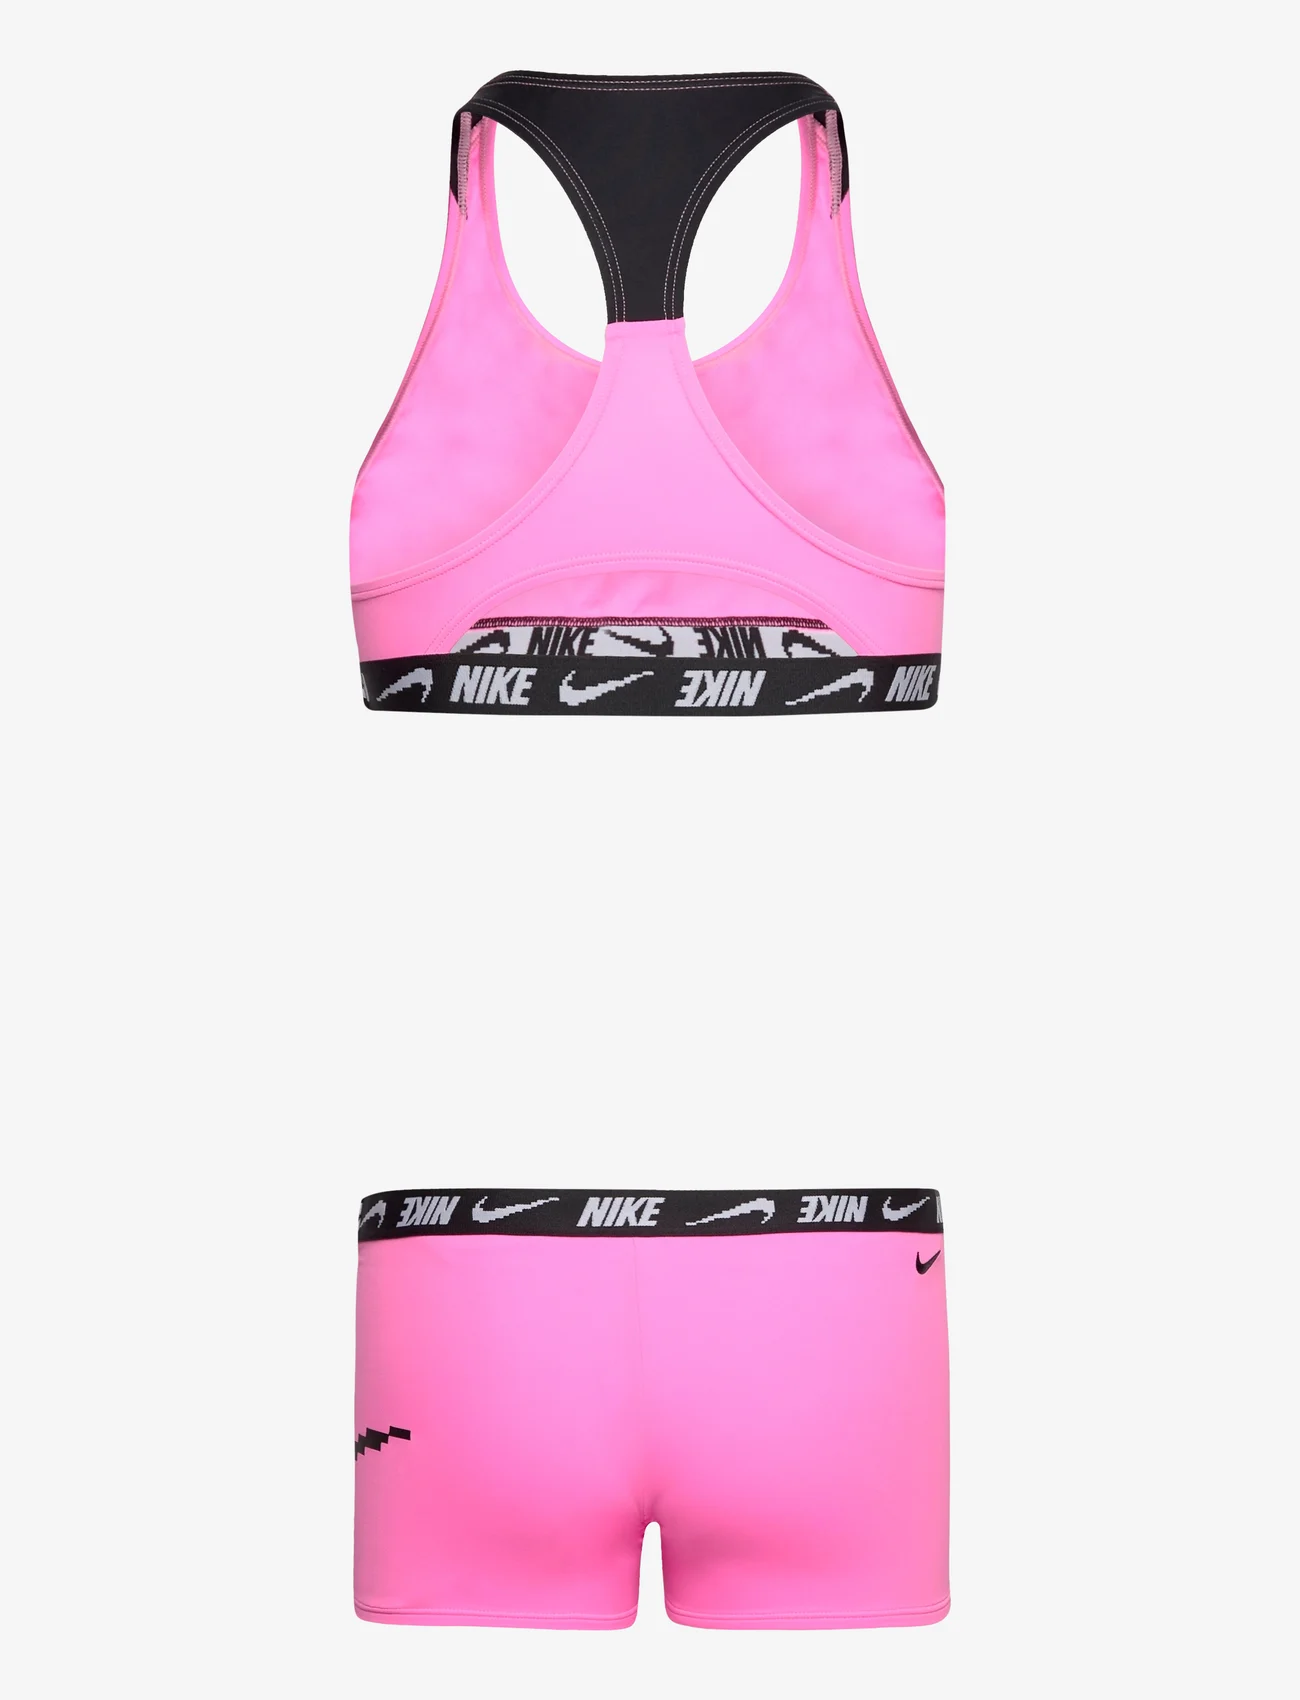 NIKE SWIM Nike G Racerback Bikini Set (Pink Spell), (35.63 €) | Large ...